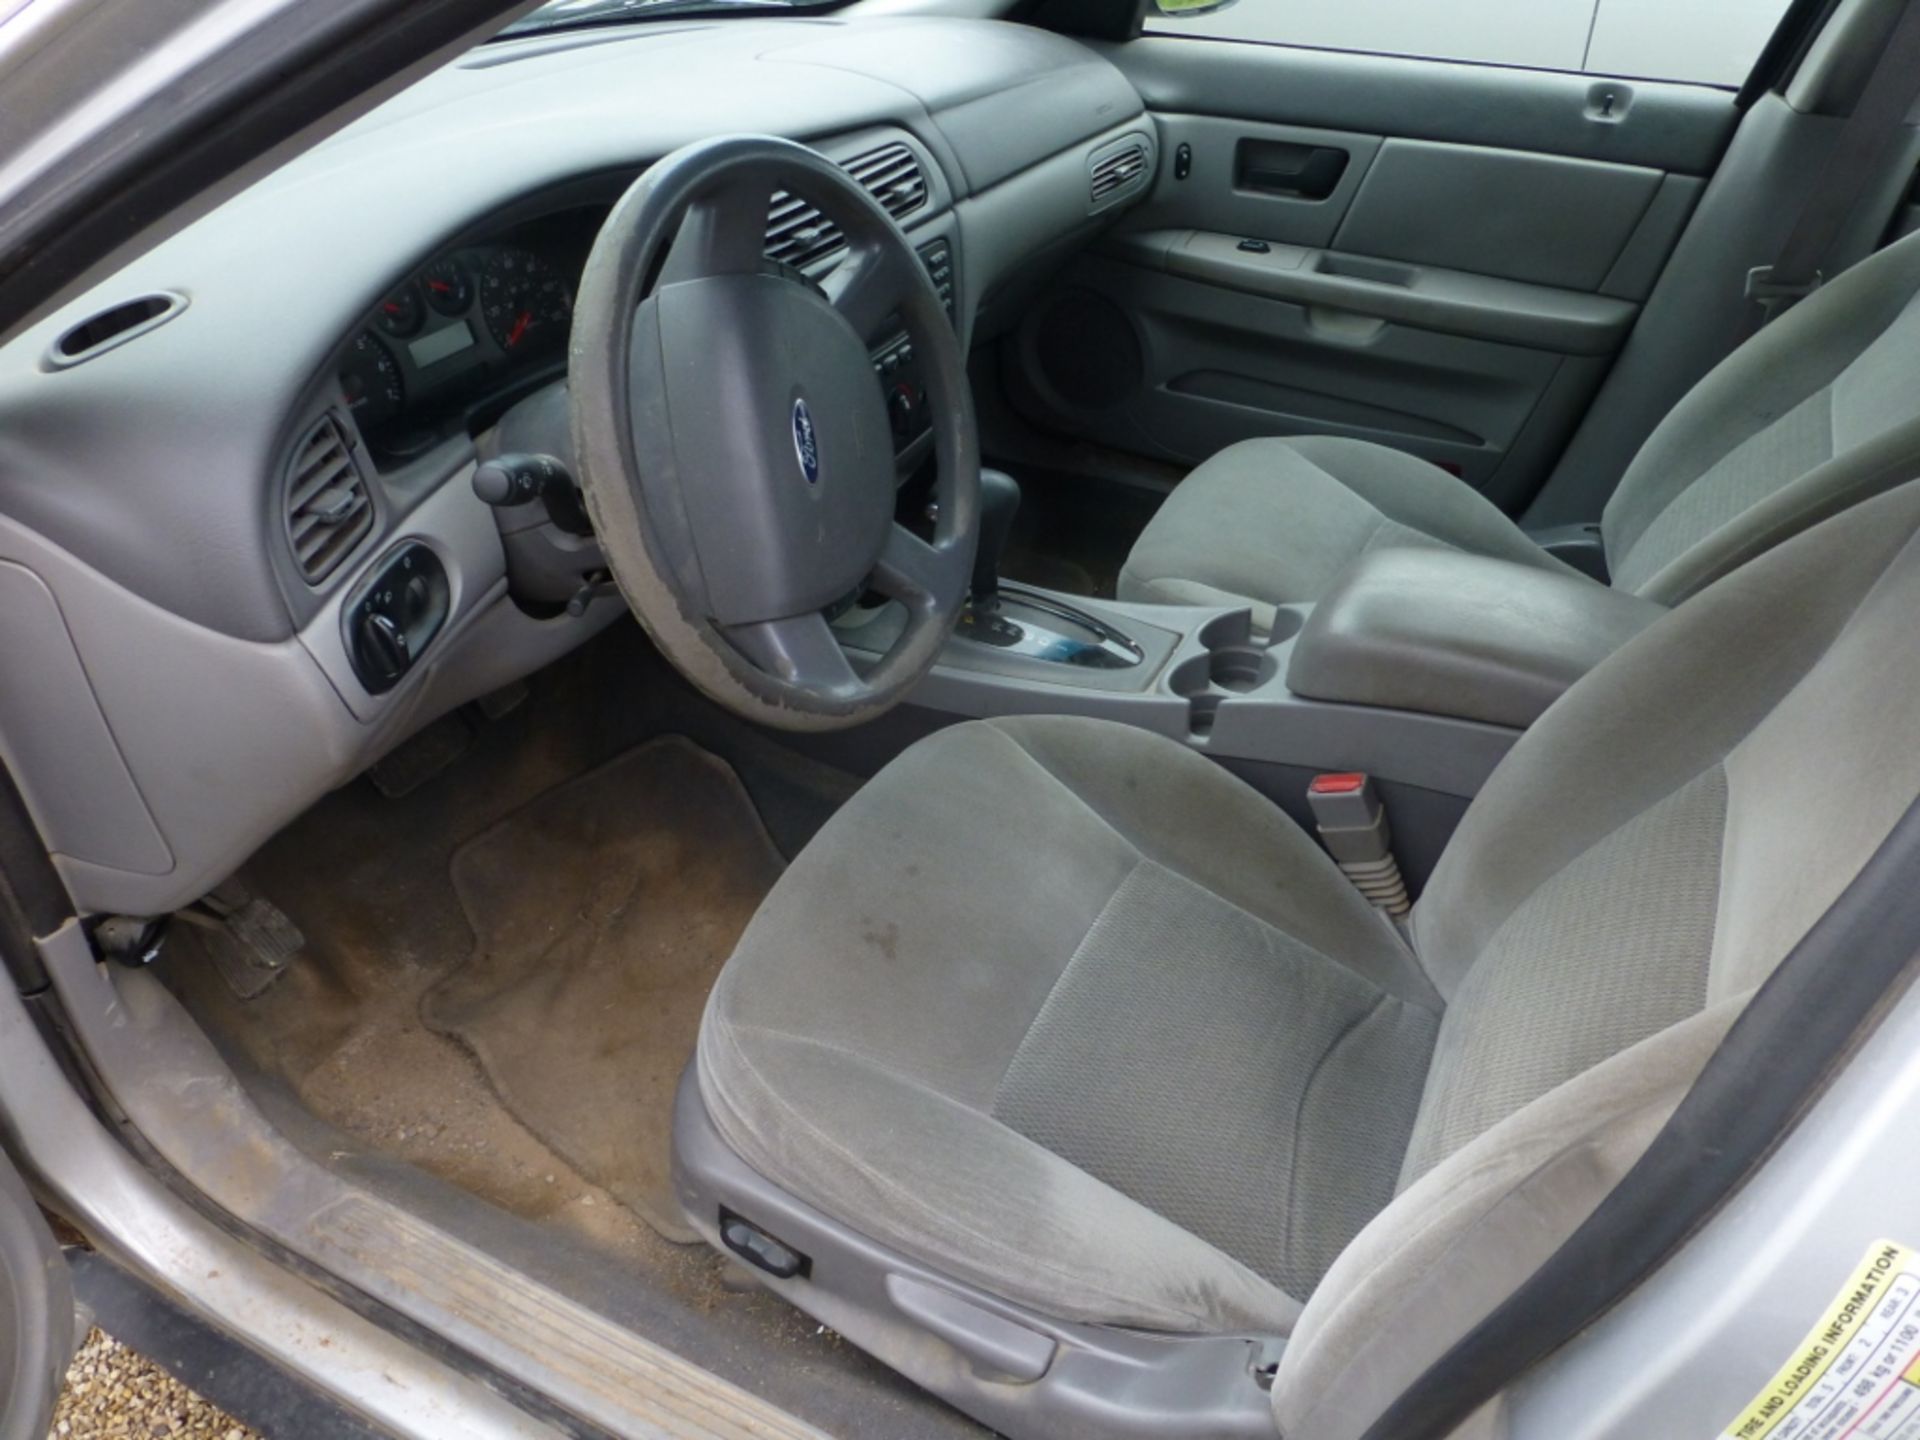 2007 Ford Taurus, 4 door, Sedan, Silver, automatic transmission, 245,506 miles, unverified. - Image 22 of 29